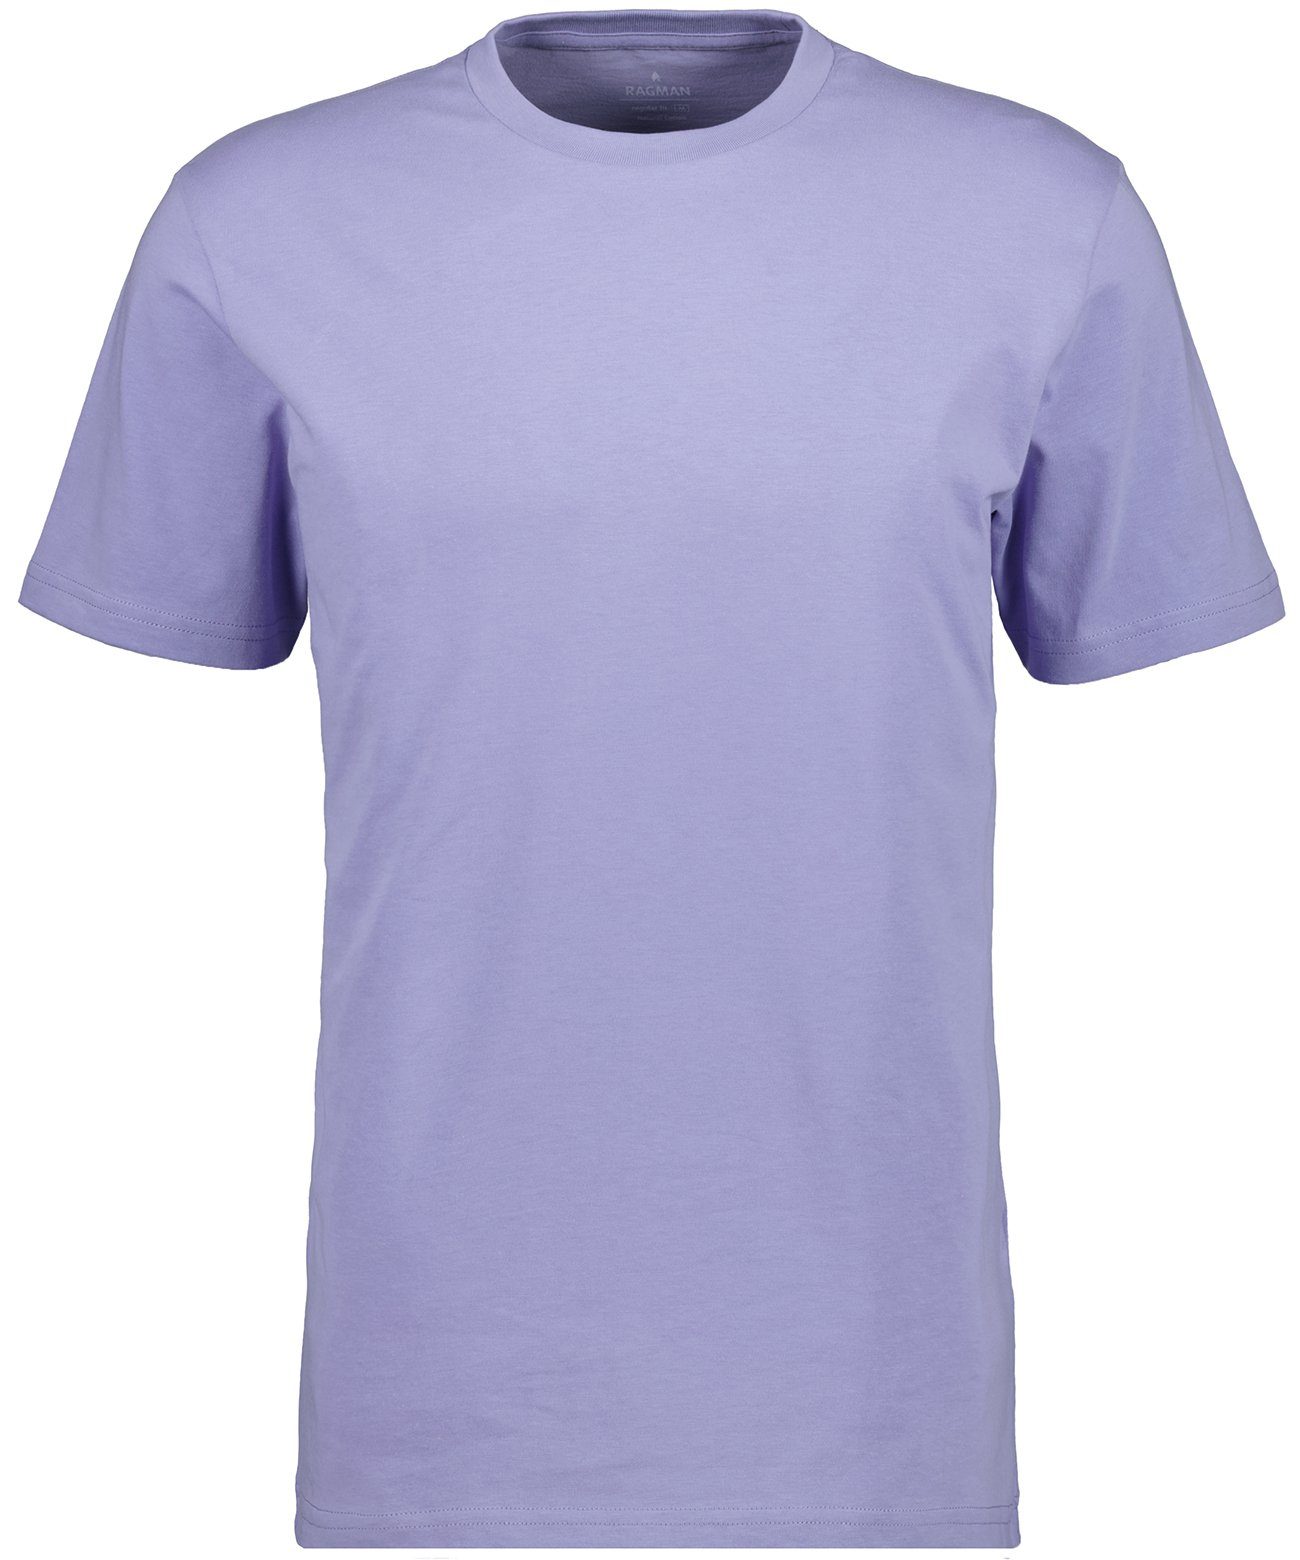 RAGMAN Violet-421 T-Shirt